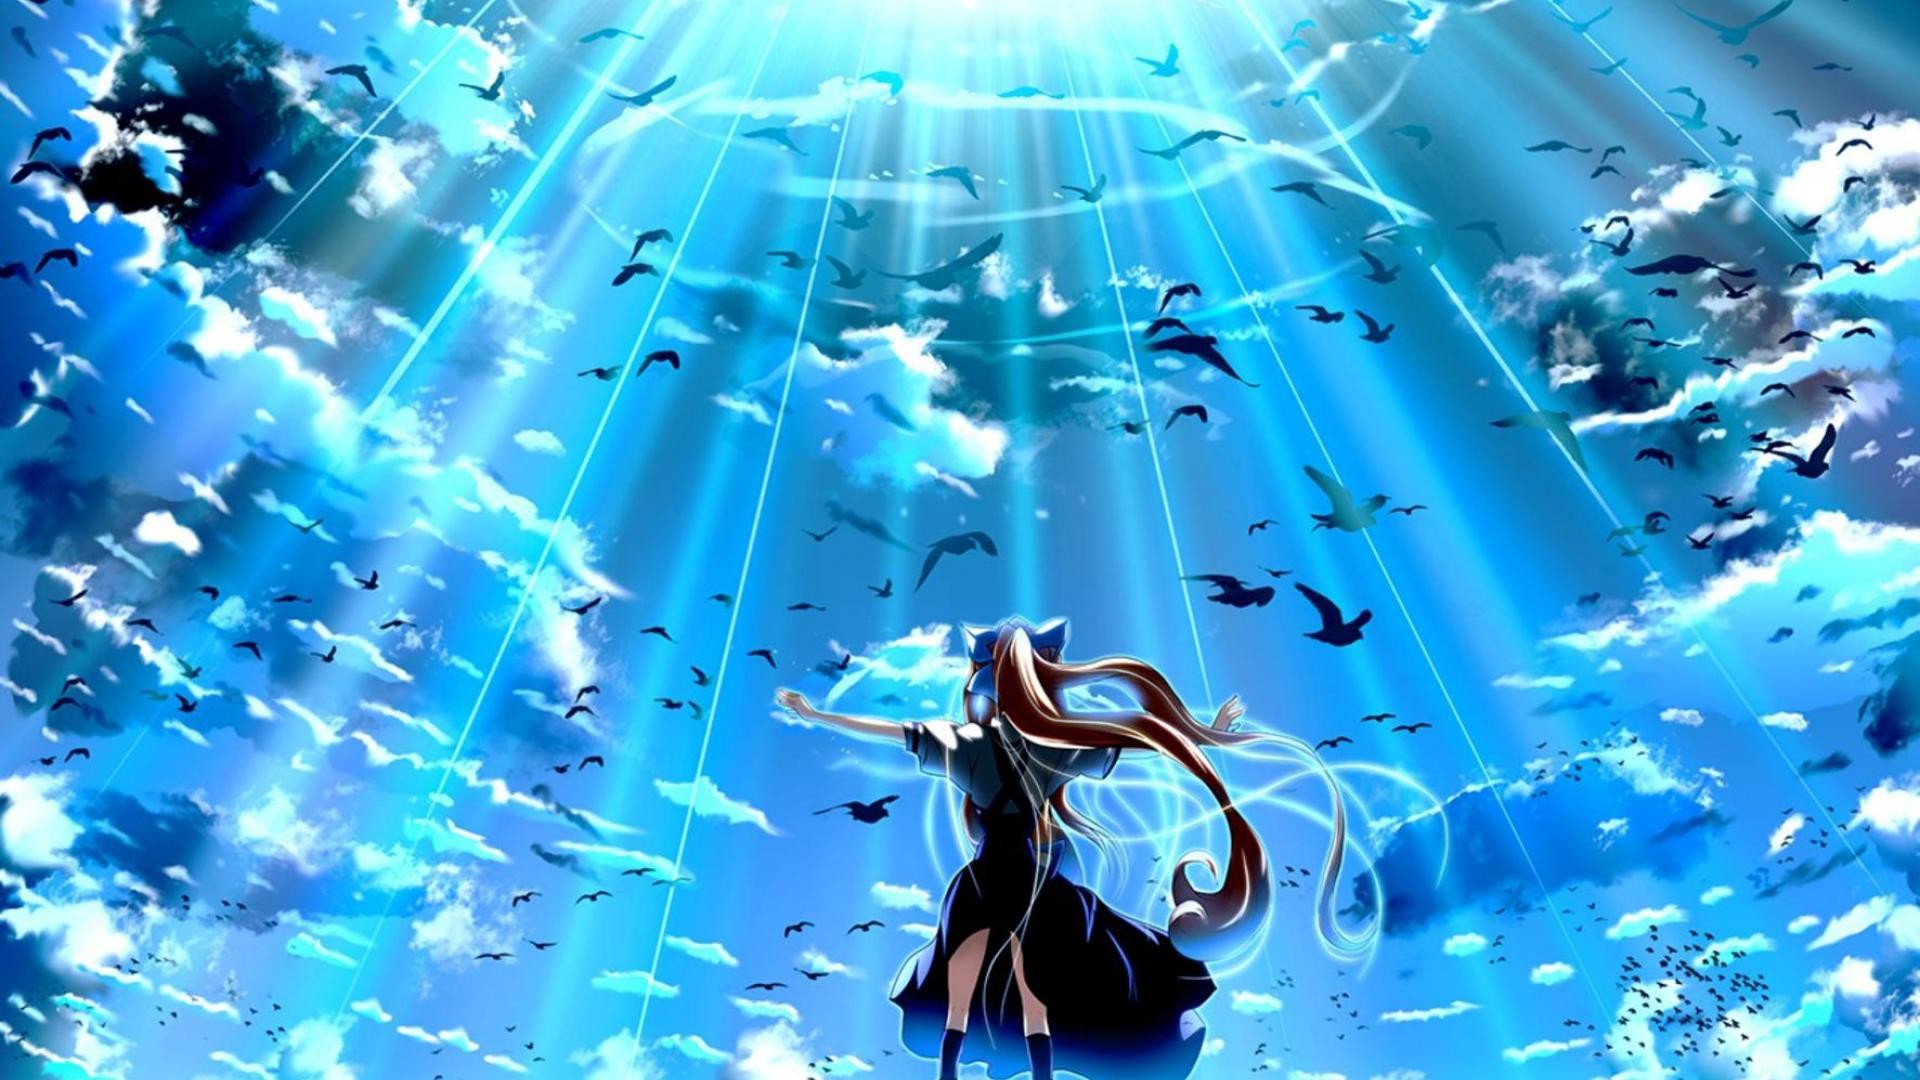 HD Anime Wallpaper 1080p Image